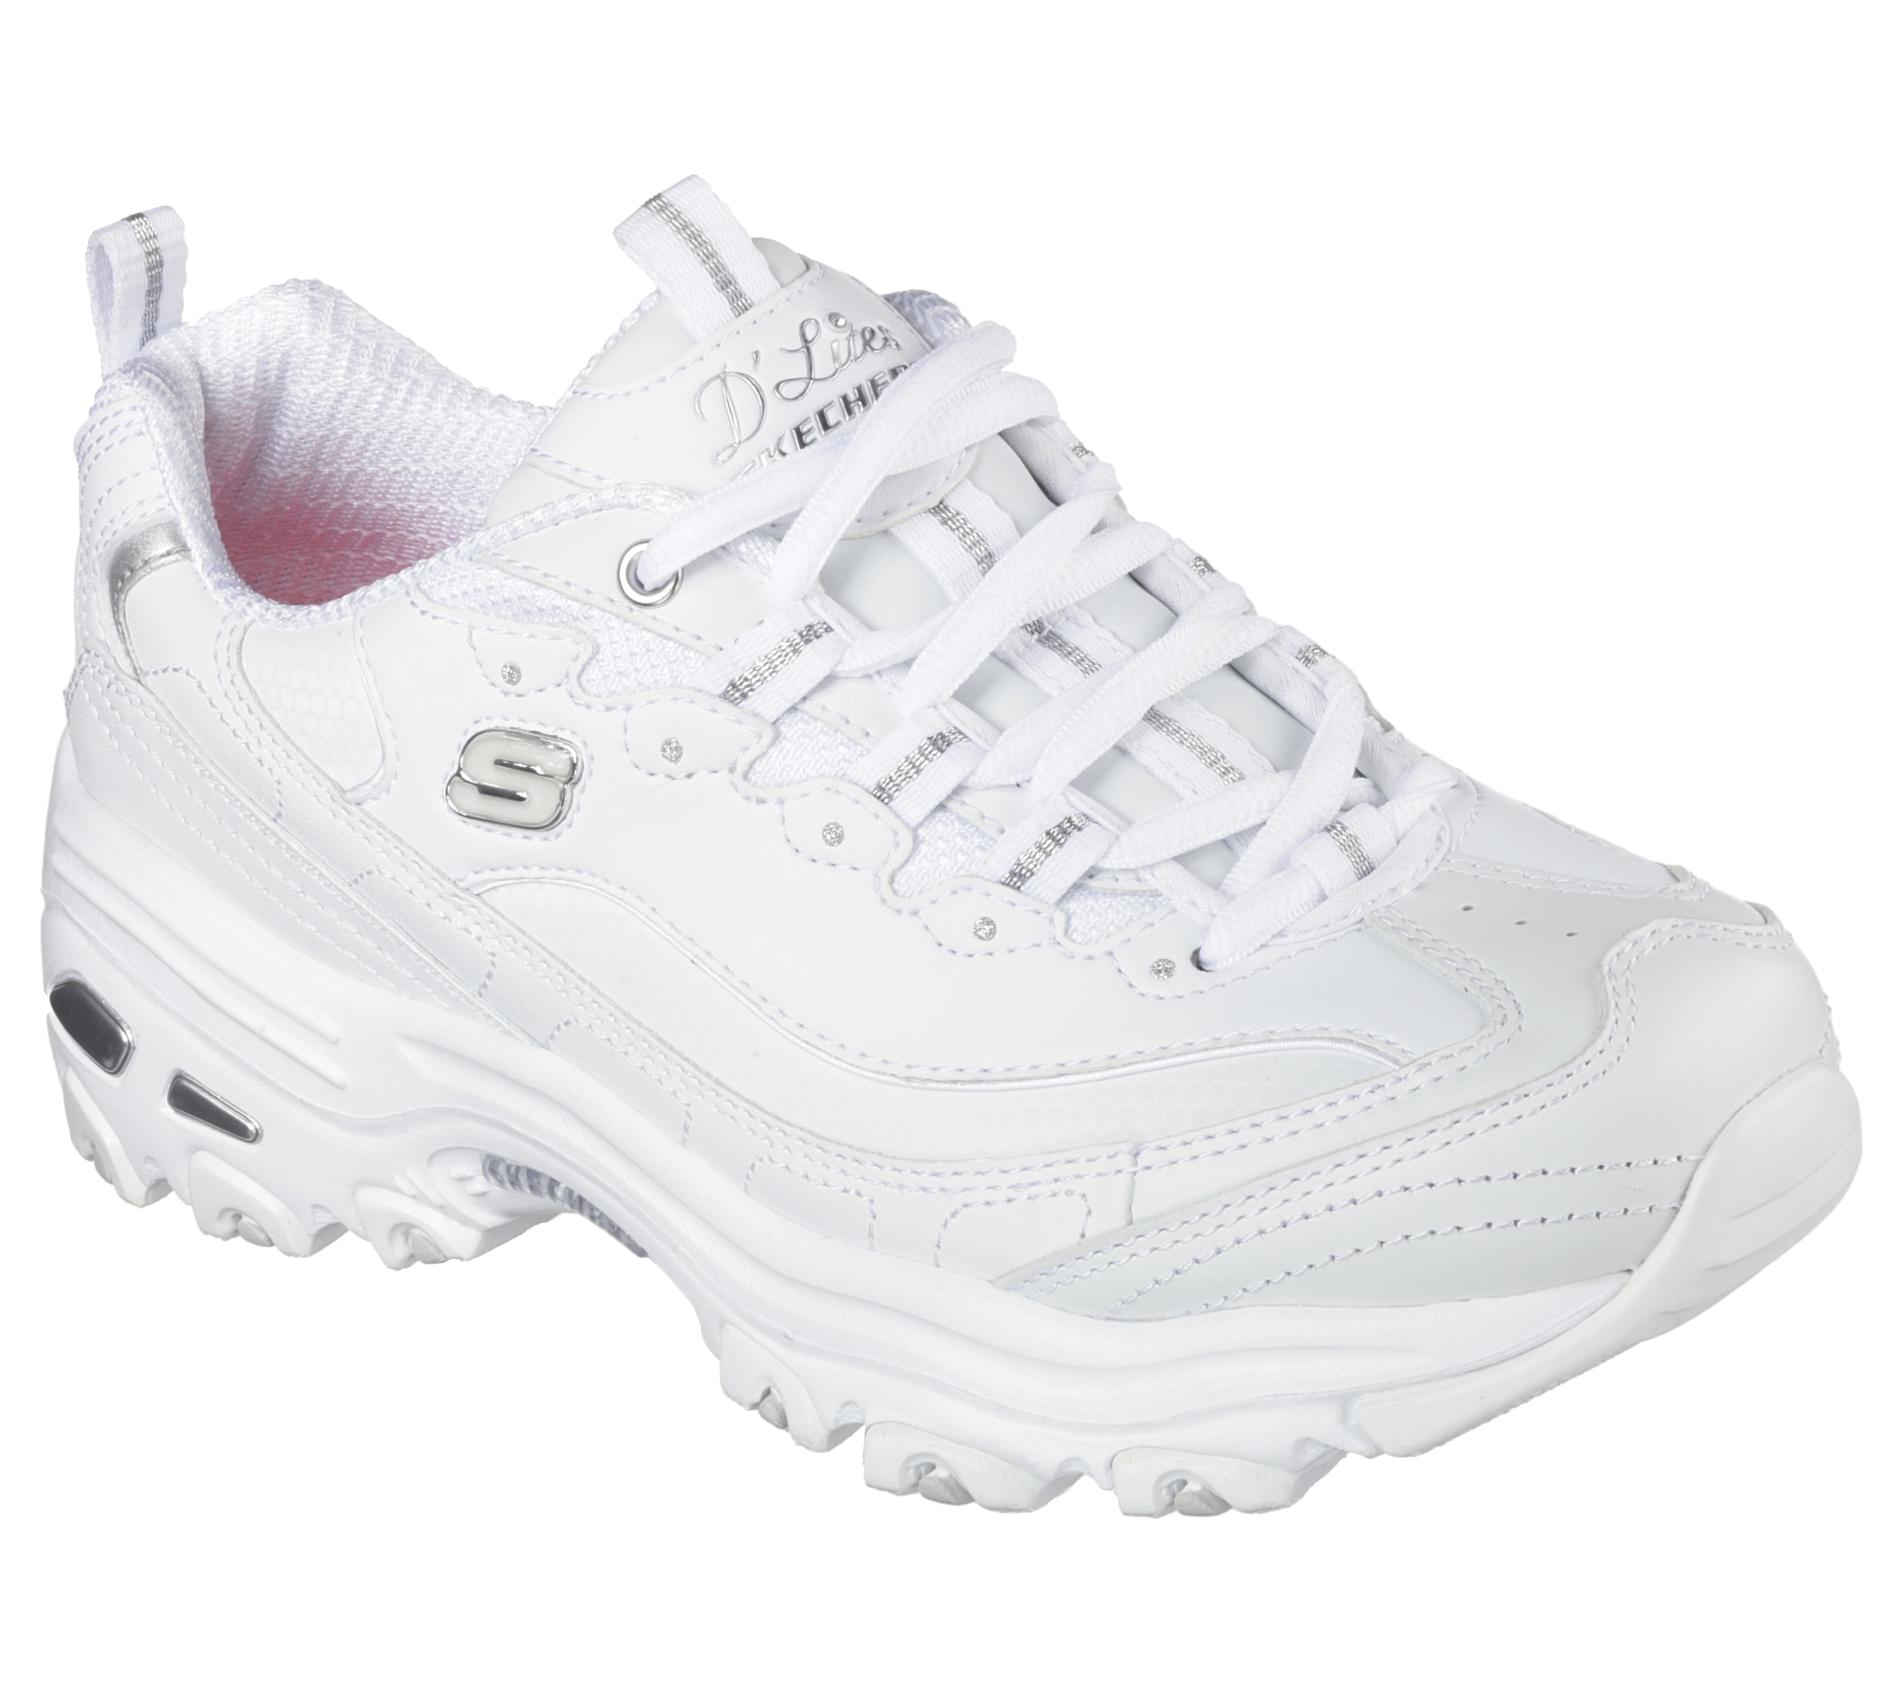 Skechers D Lite Women s Fresh Start White Walking Shoe 